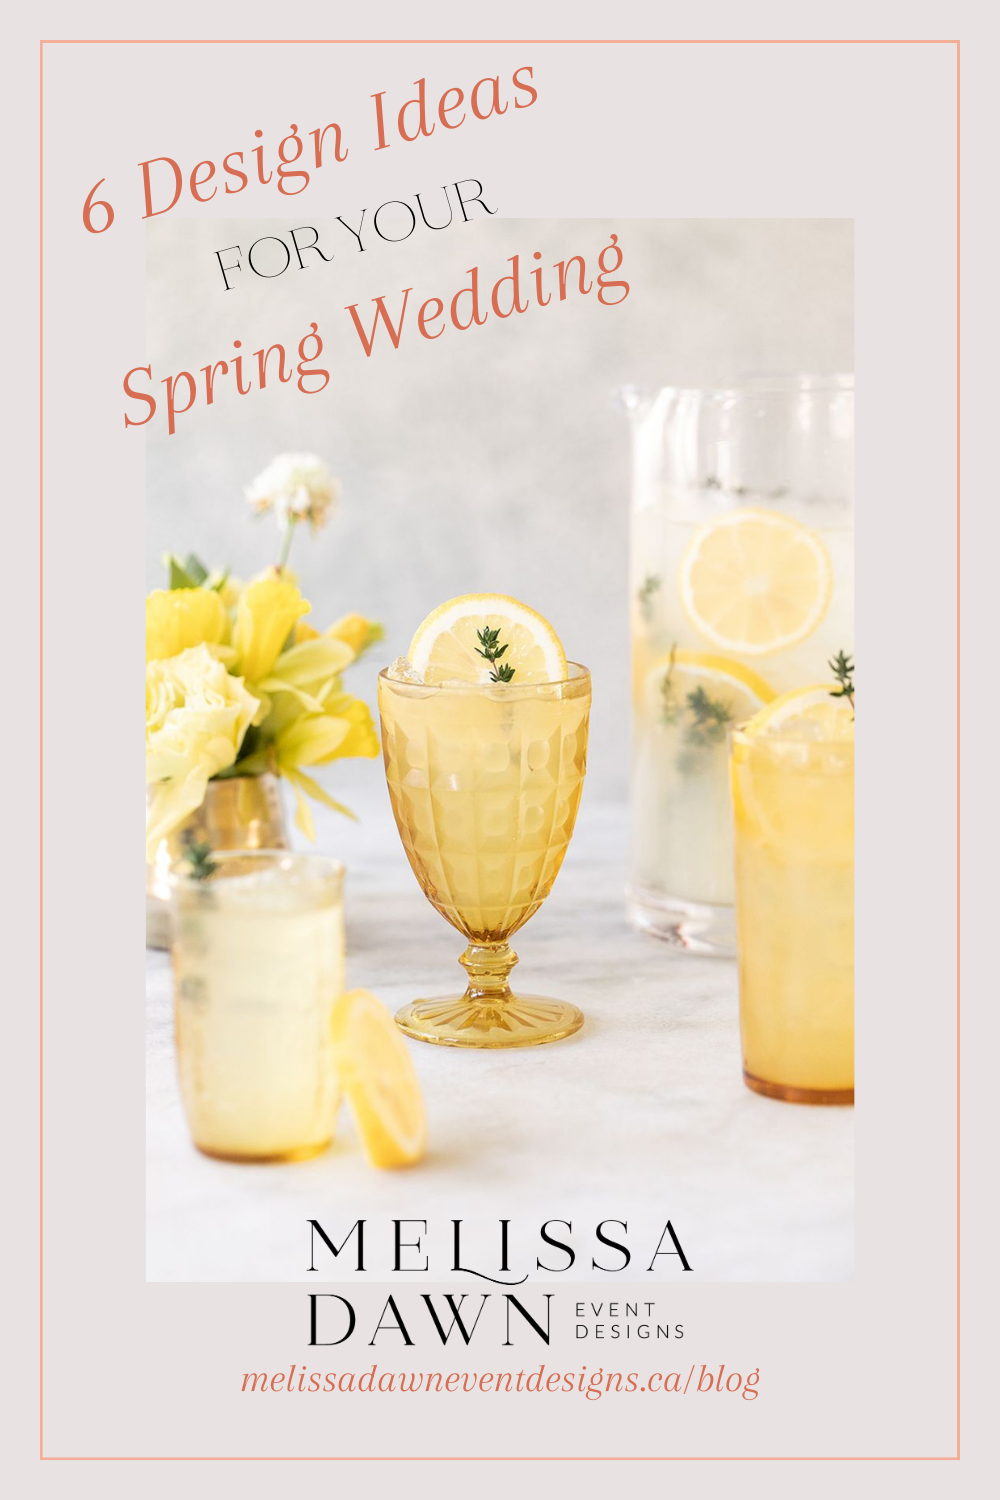 Spring-Wedding-Ideas-Melissa Dawn-Event-Designs.png